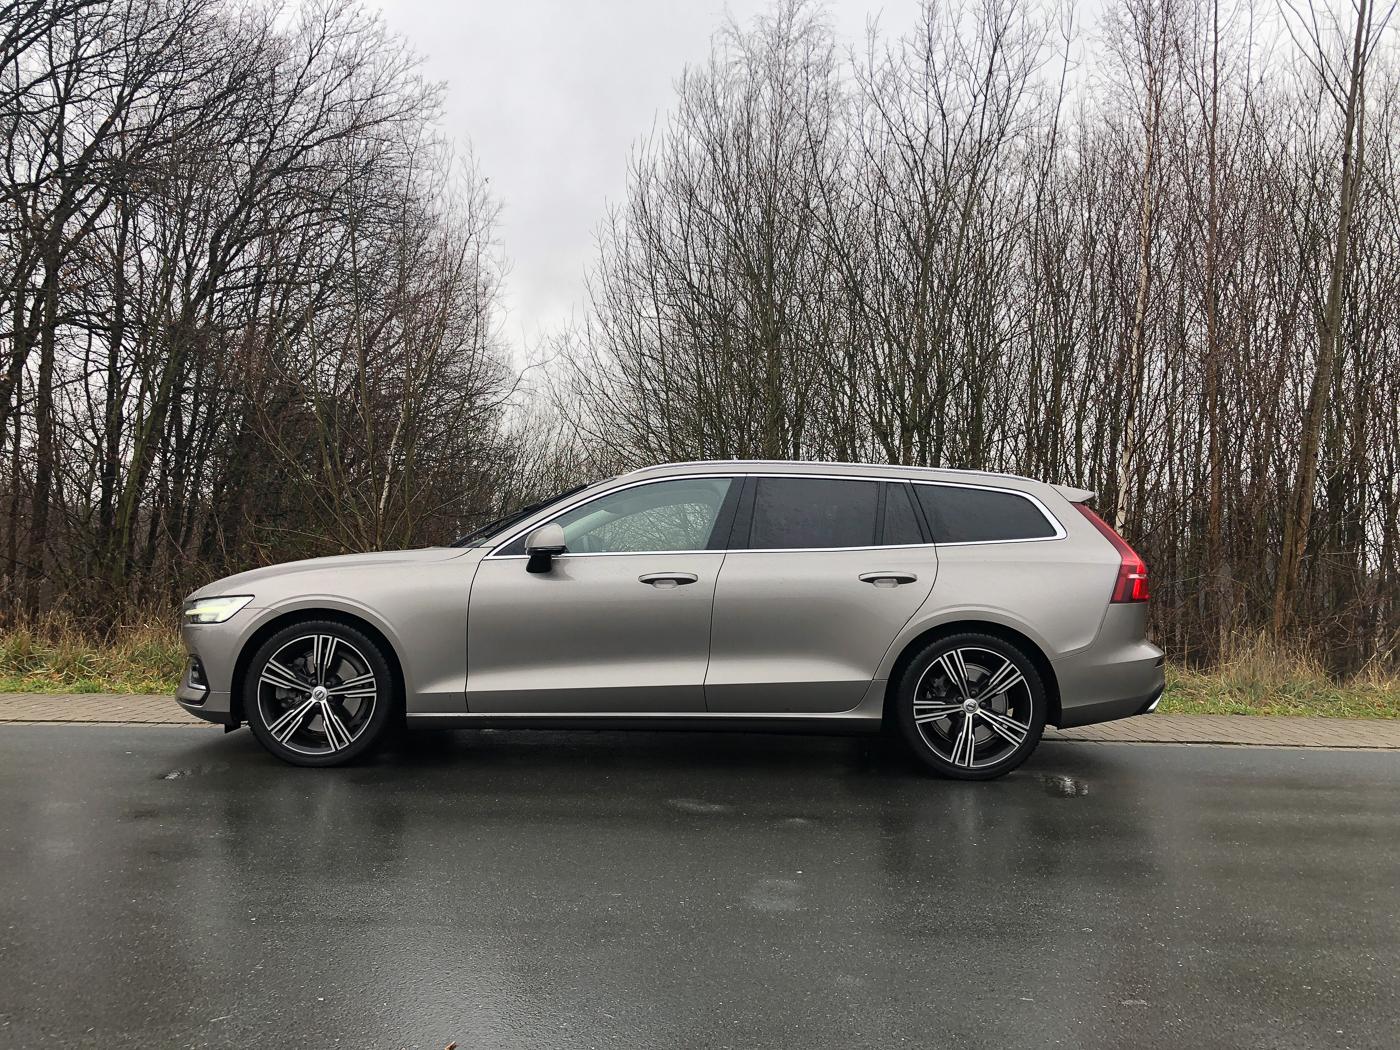 2019 Volvo V60 D4 Fahrbericht Test Review - R+V Magazin